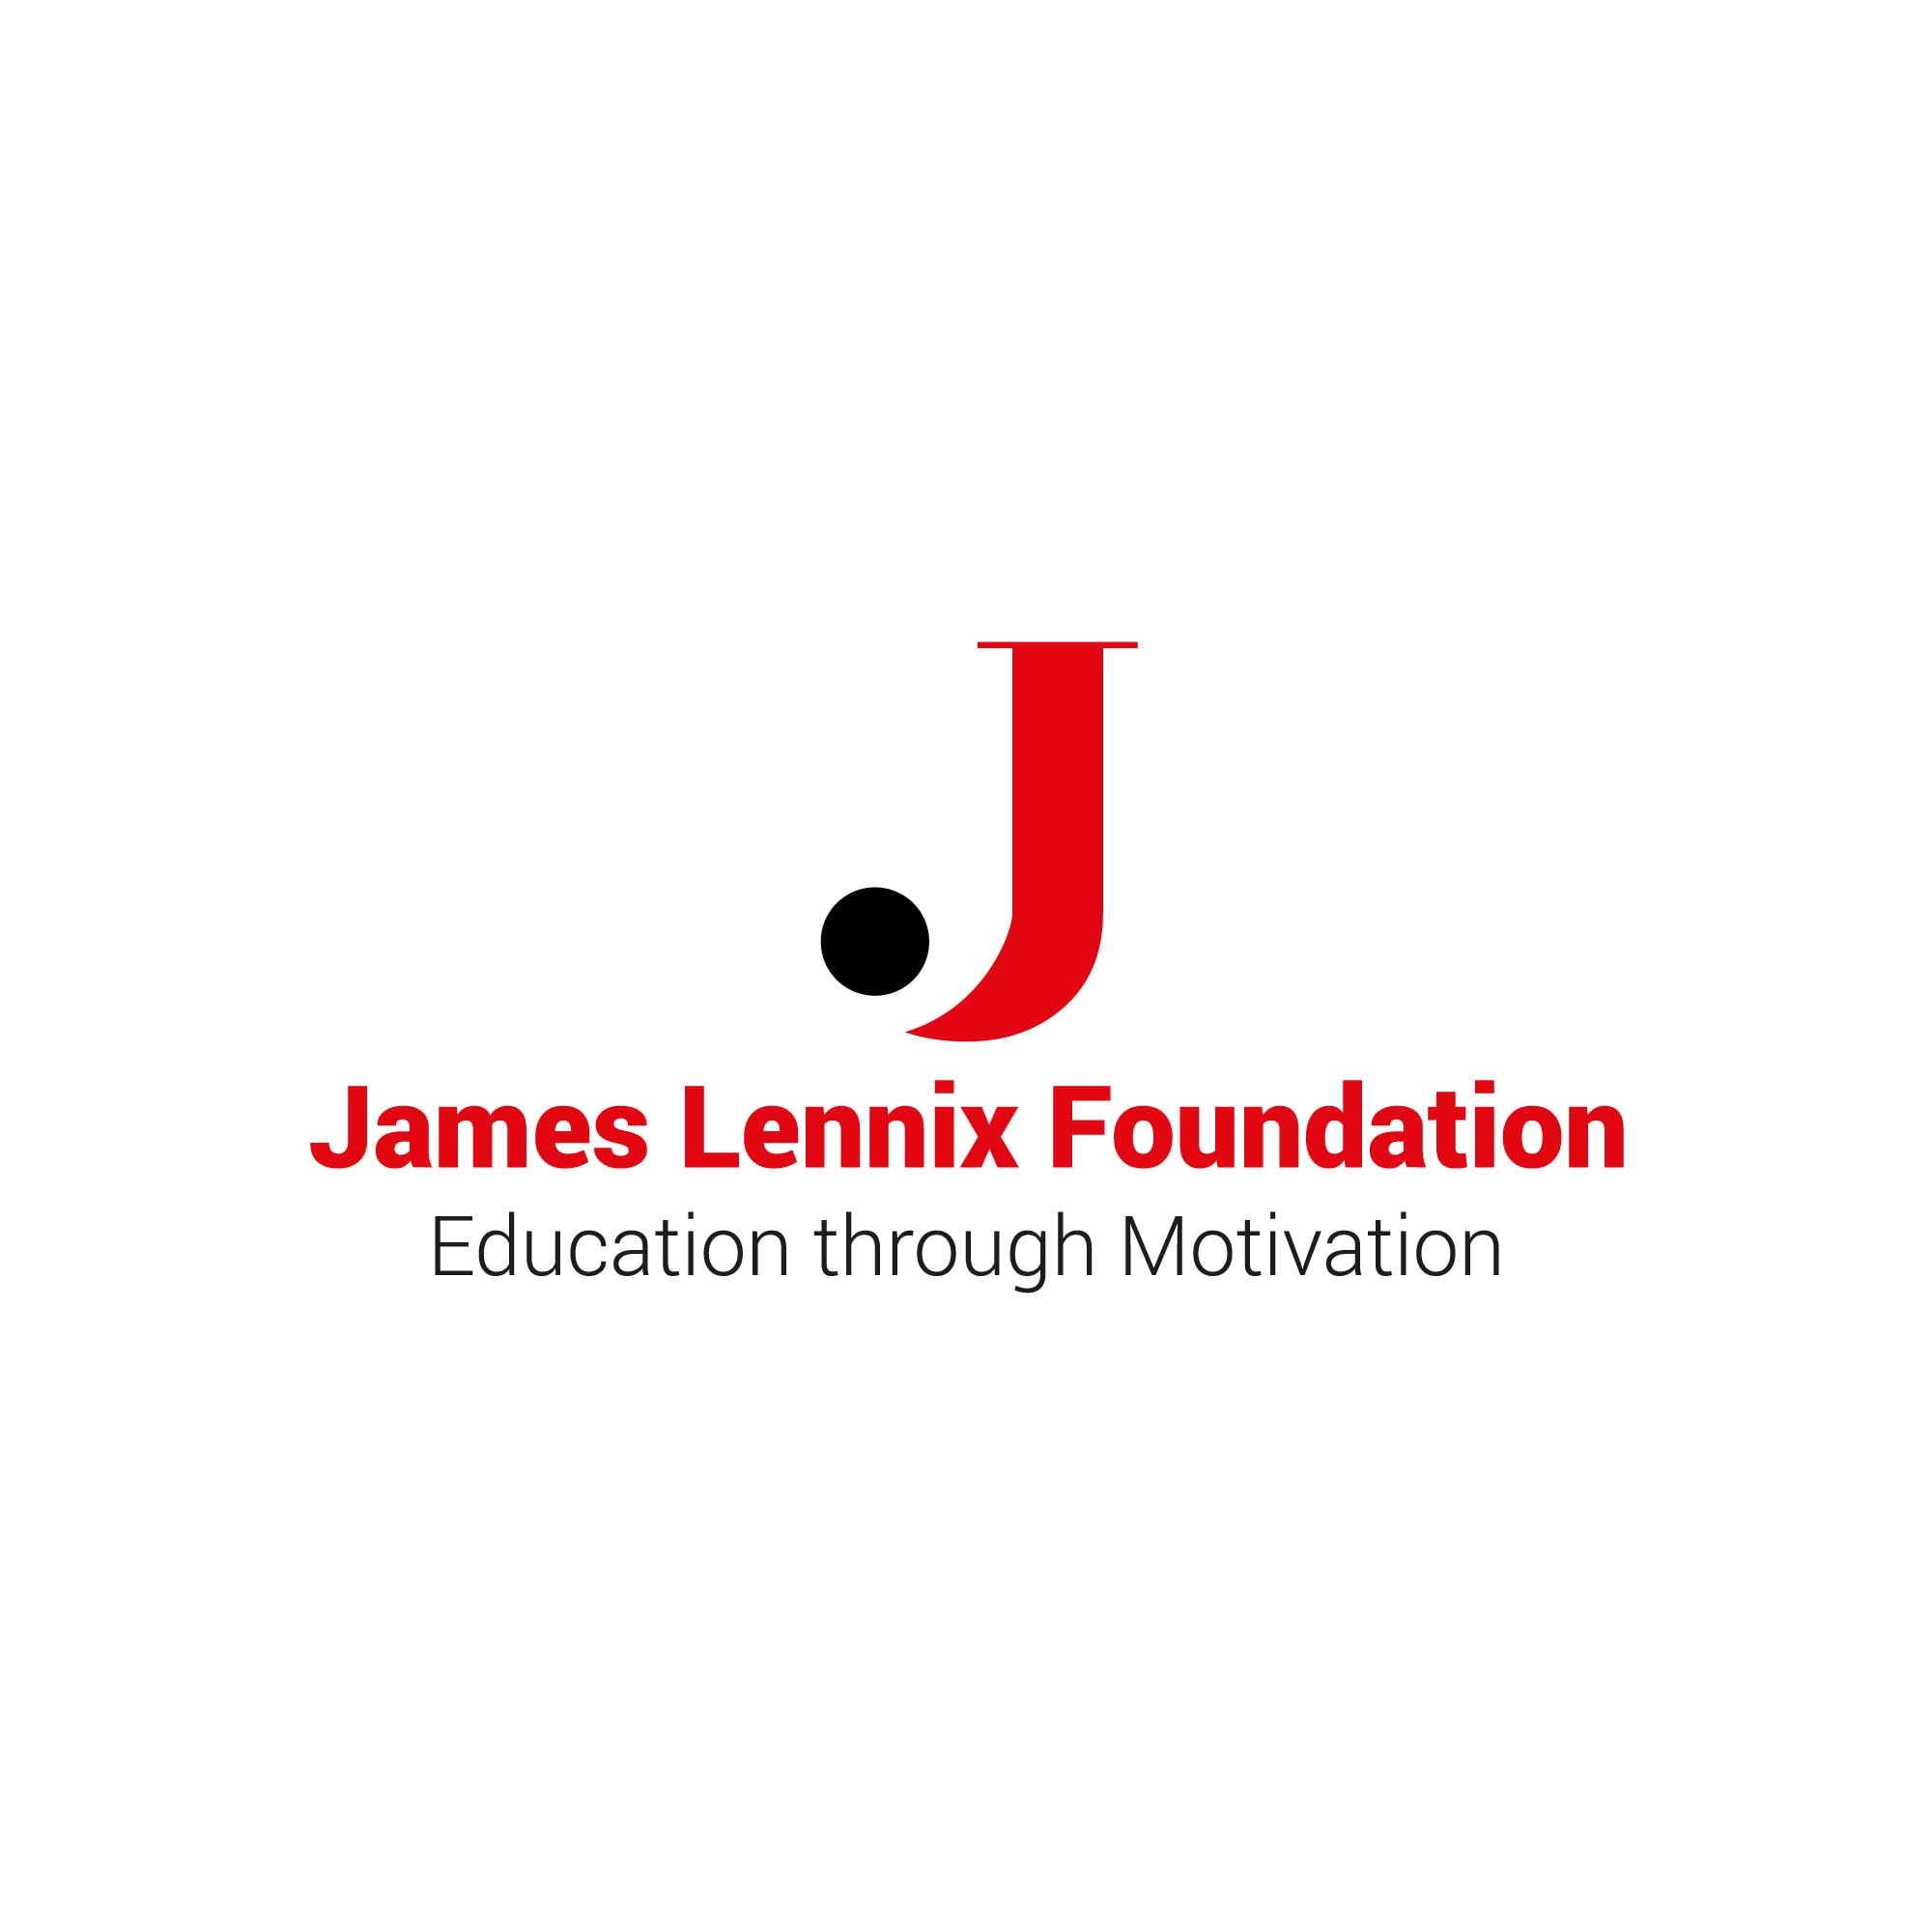 James Lennix Foundation